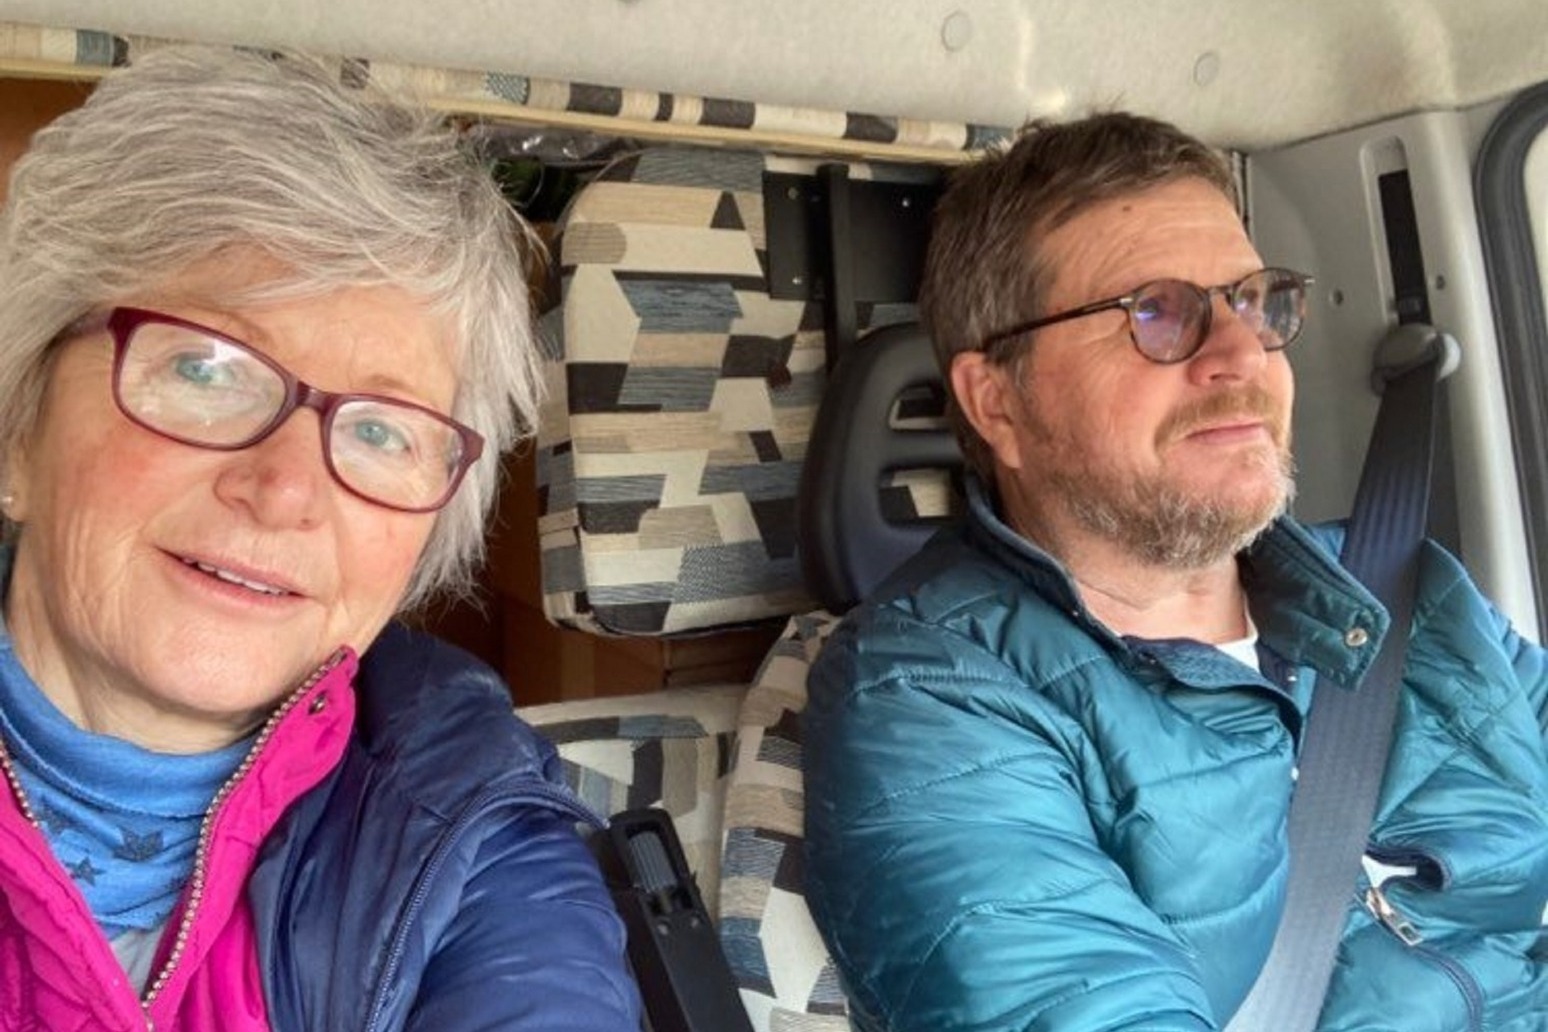 Hampshire couple take Molly the motorhome to help people fleeing Ukraine